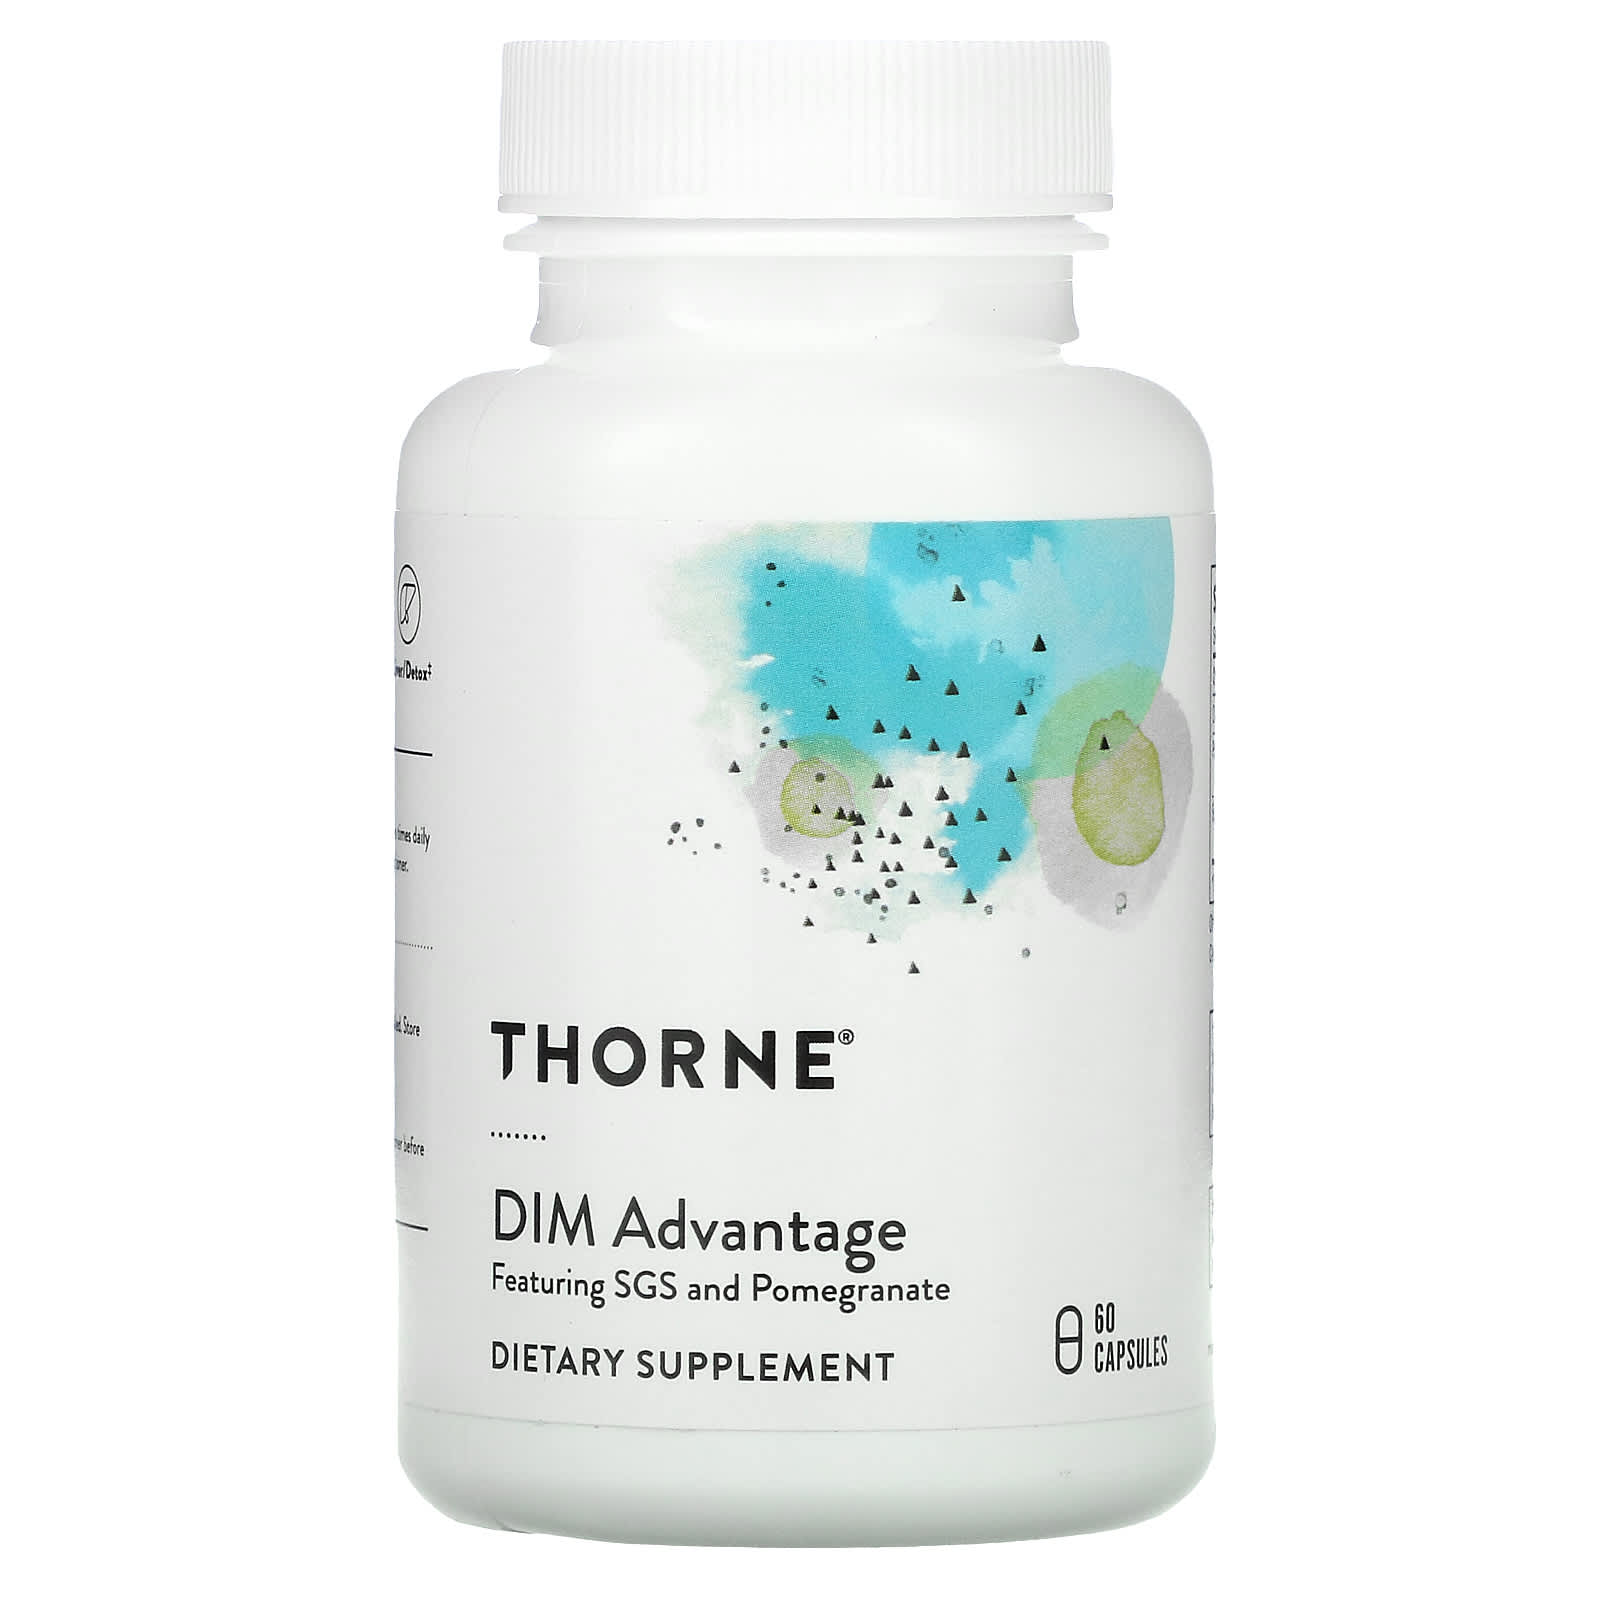 Пищевая Добавка Thorne DIM Advantage, 60 капсул dim advantage thorne research 60 капсул